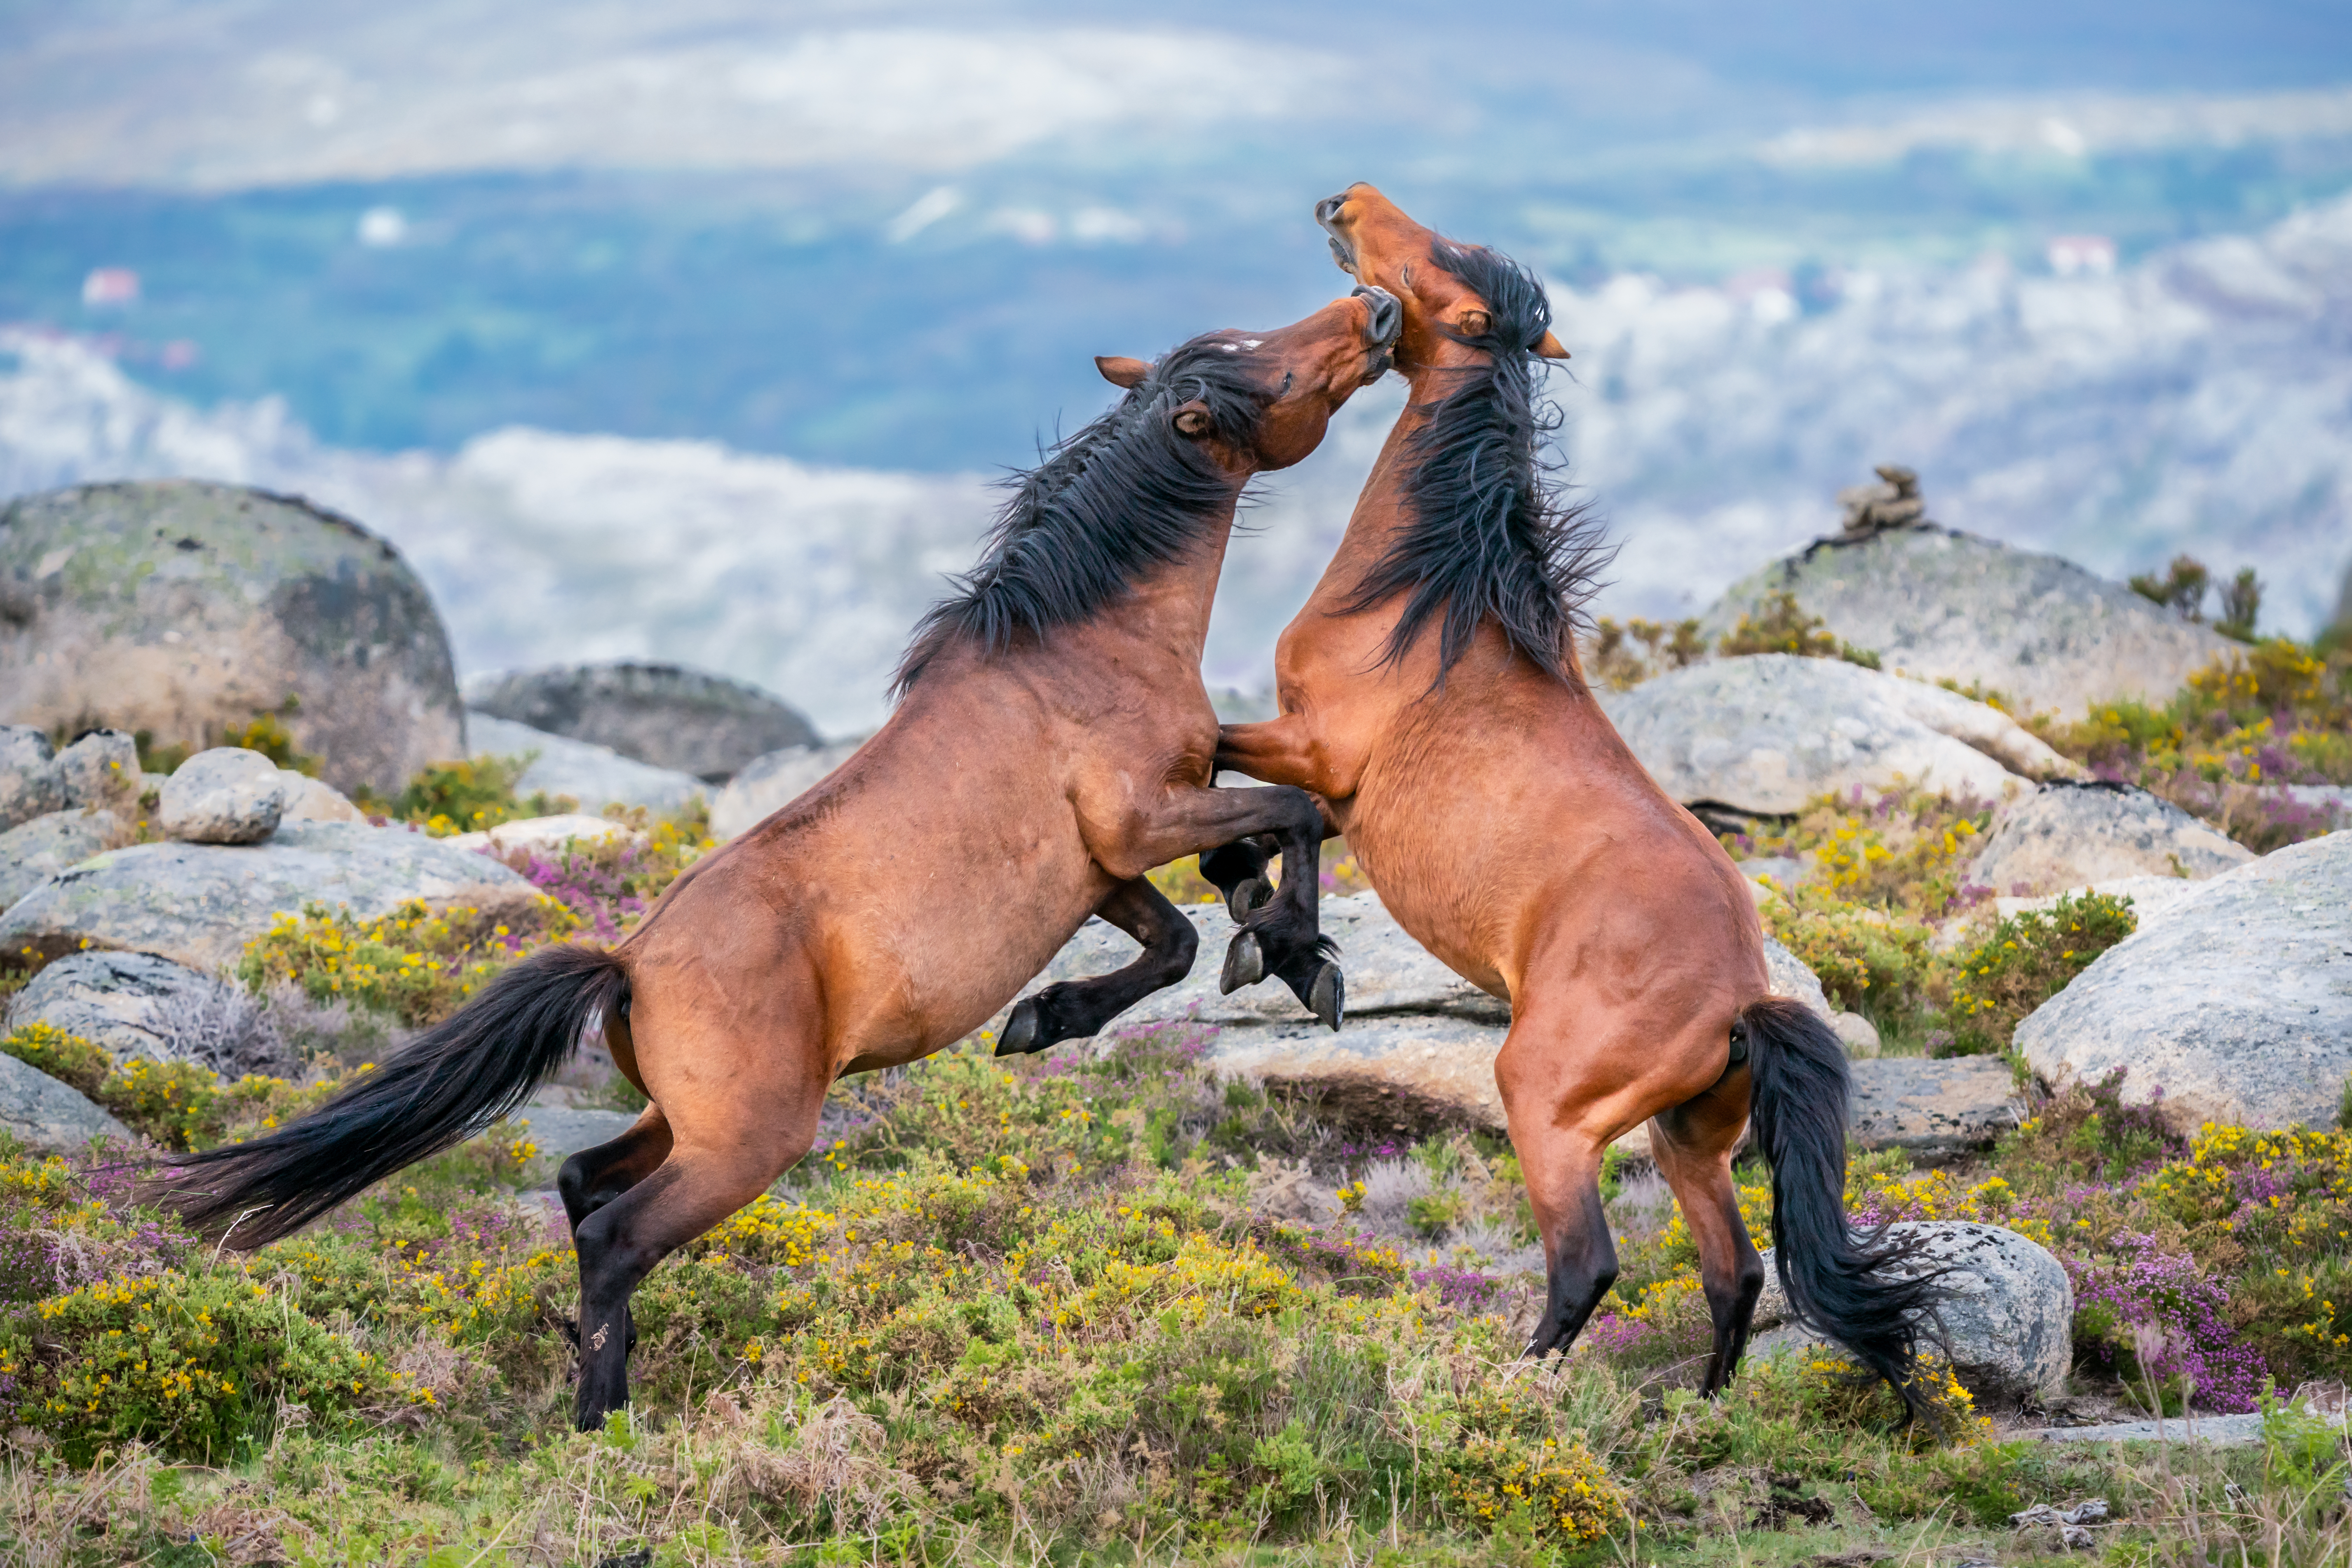 A fight between two Garranos horses at Parque Nacional da Peneda-Gerês, Portugal by Norberto Esteves